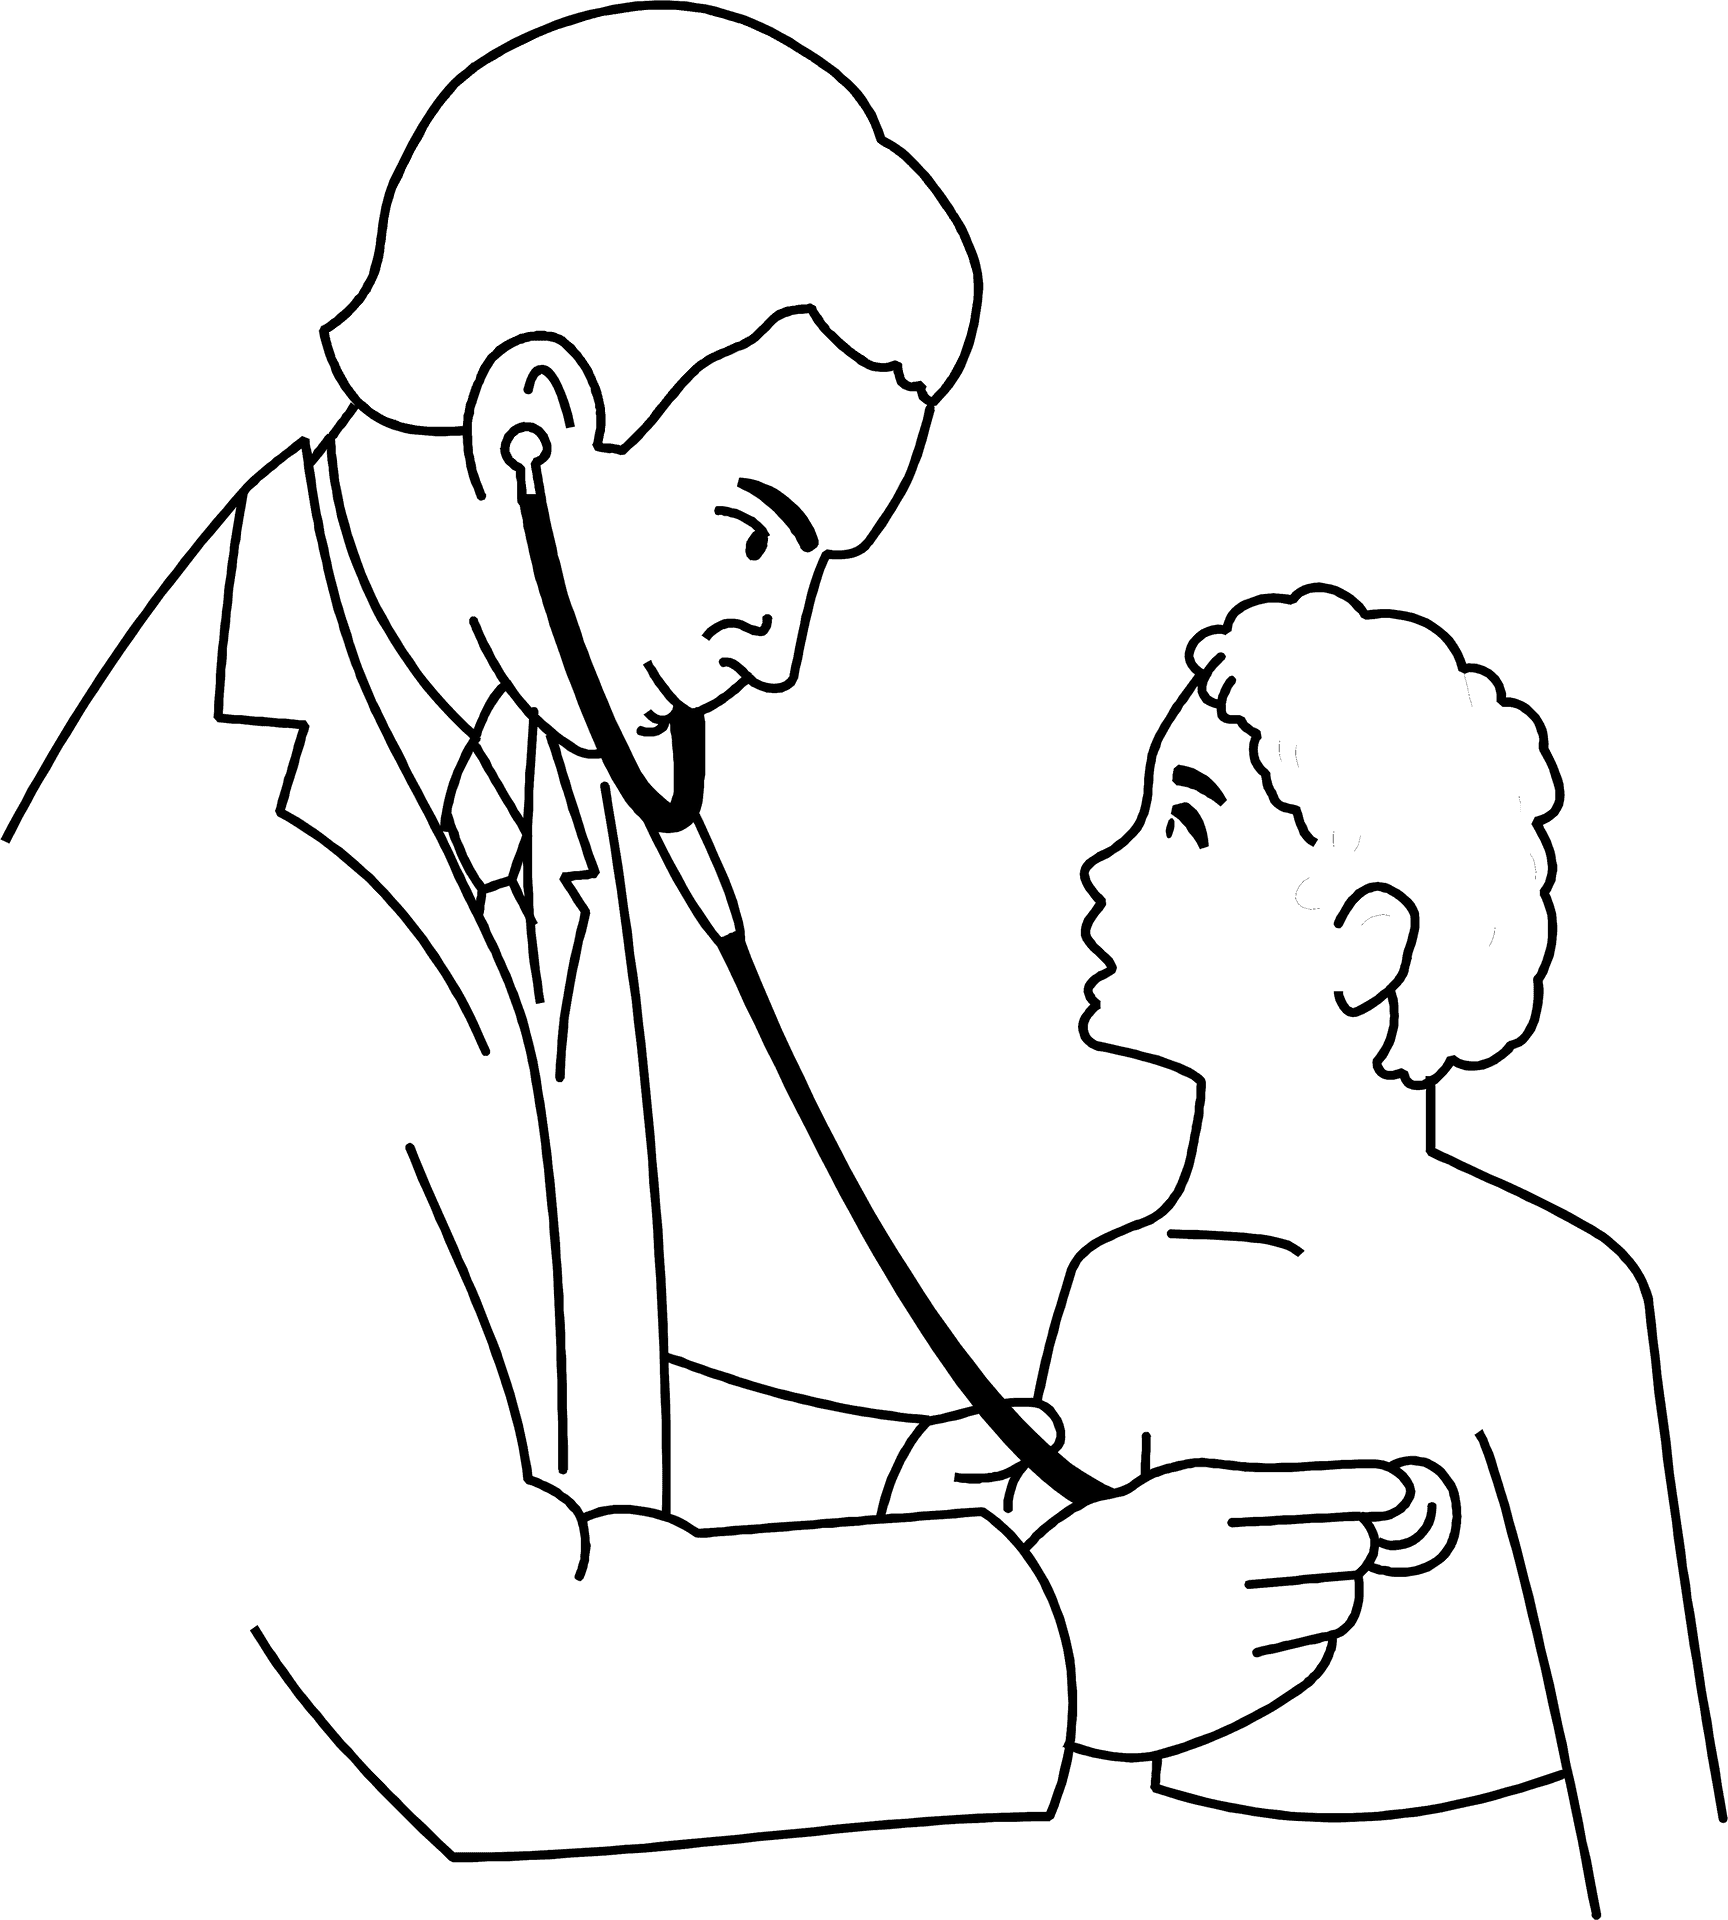 Pediatric Checkup Clipart PNG